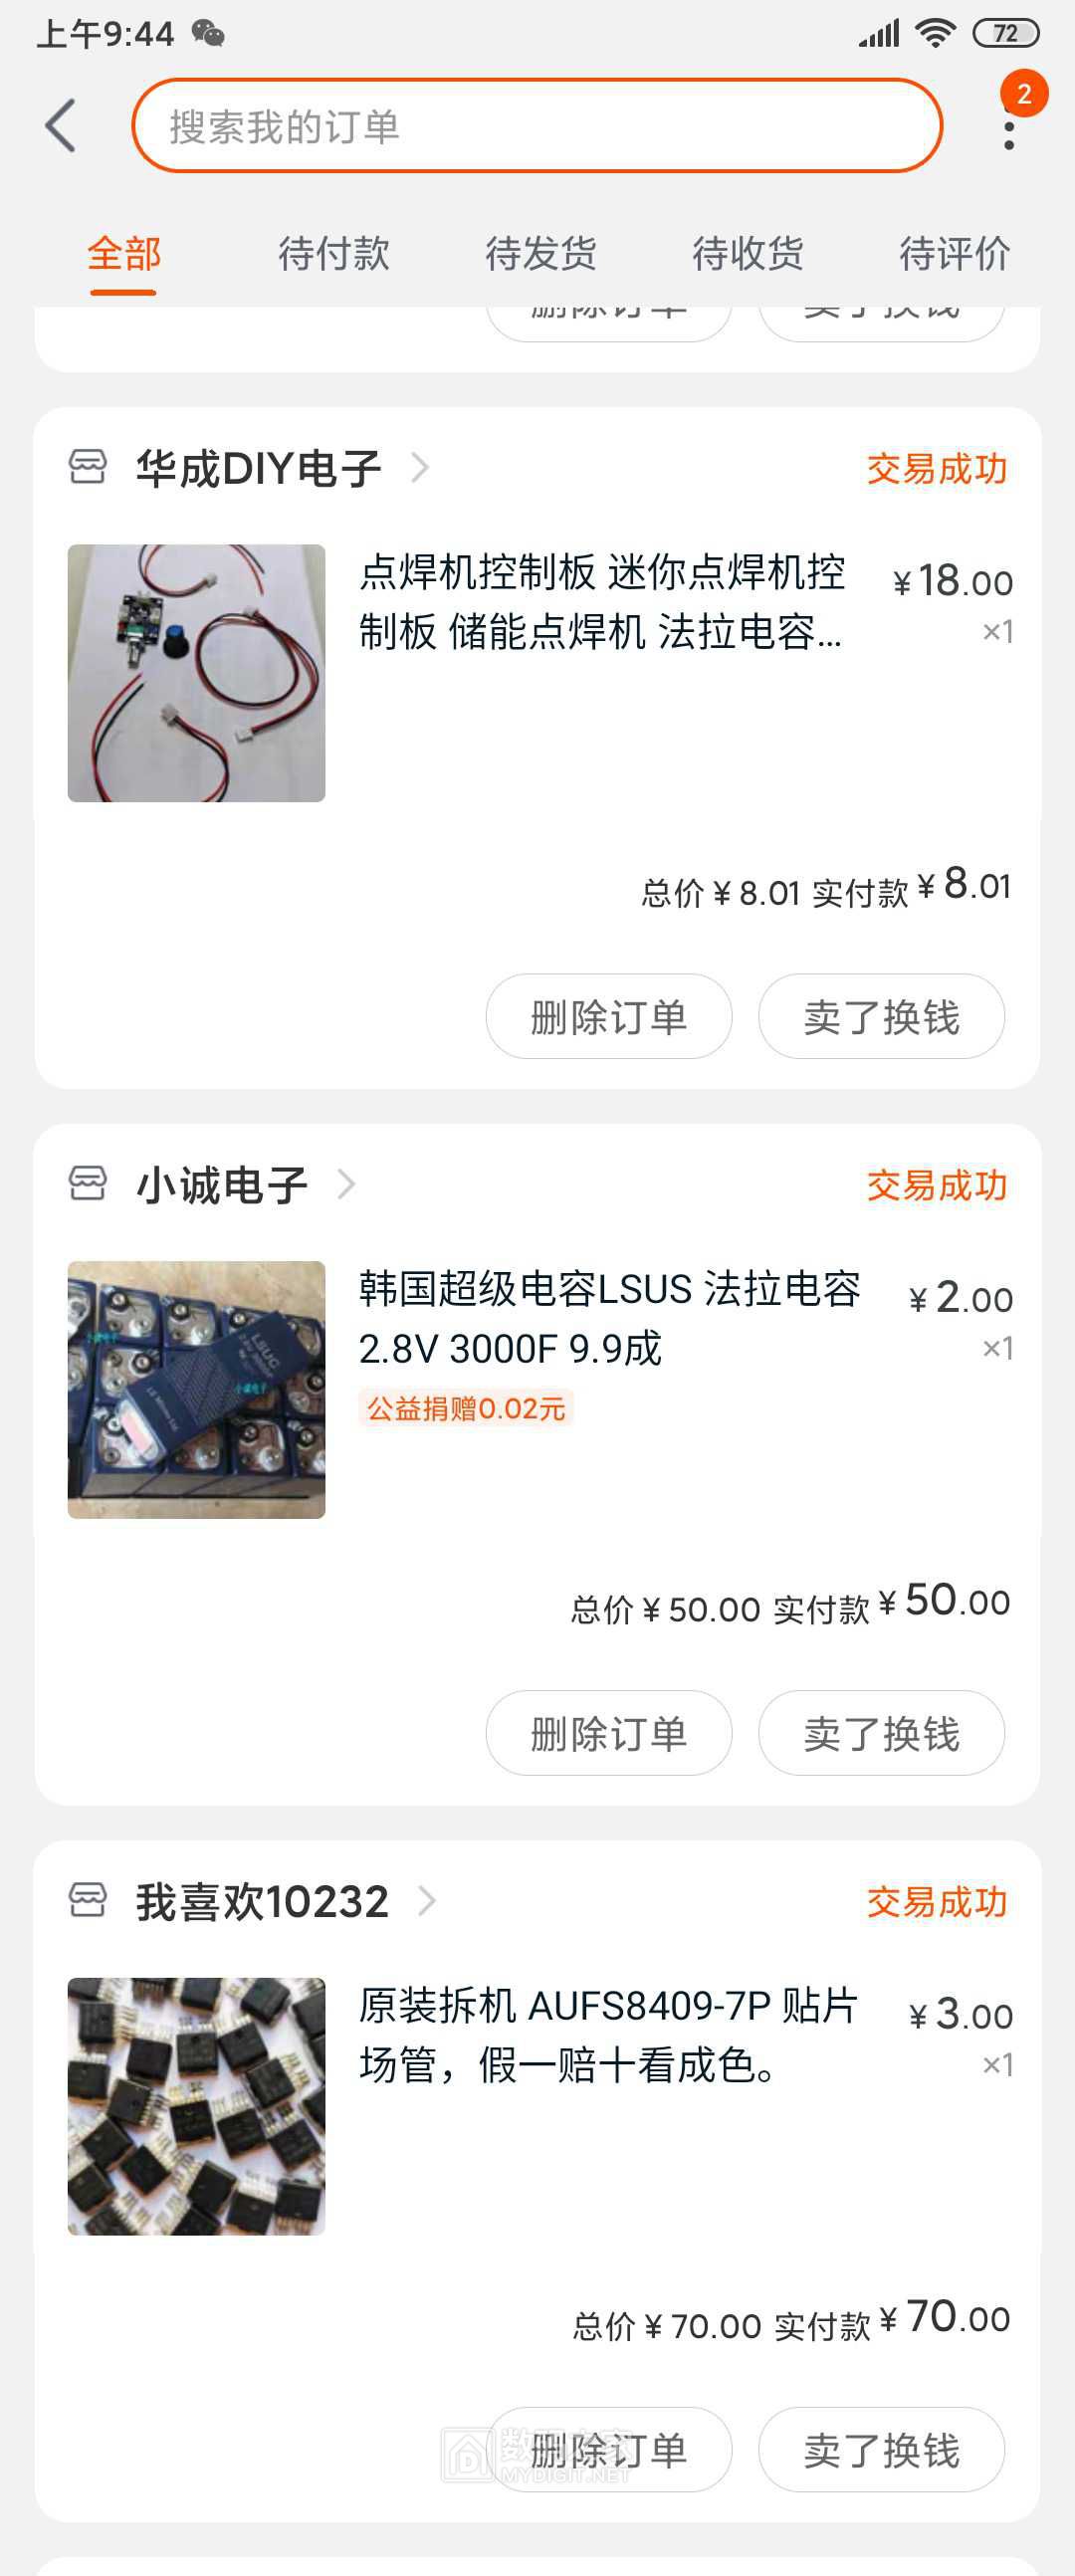 Screenshot_2021-01-20-09-46-37-243_com.taobao.taobao.jpg